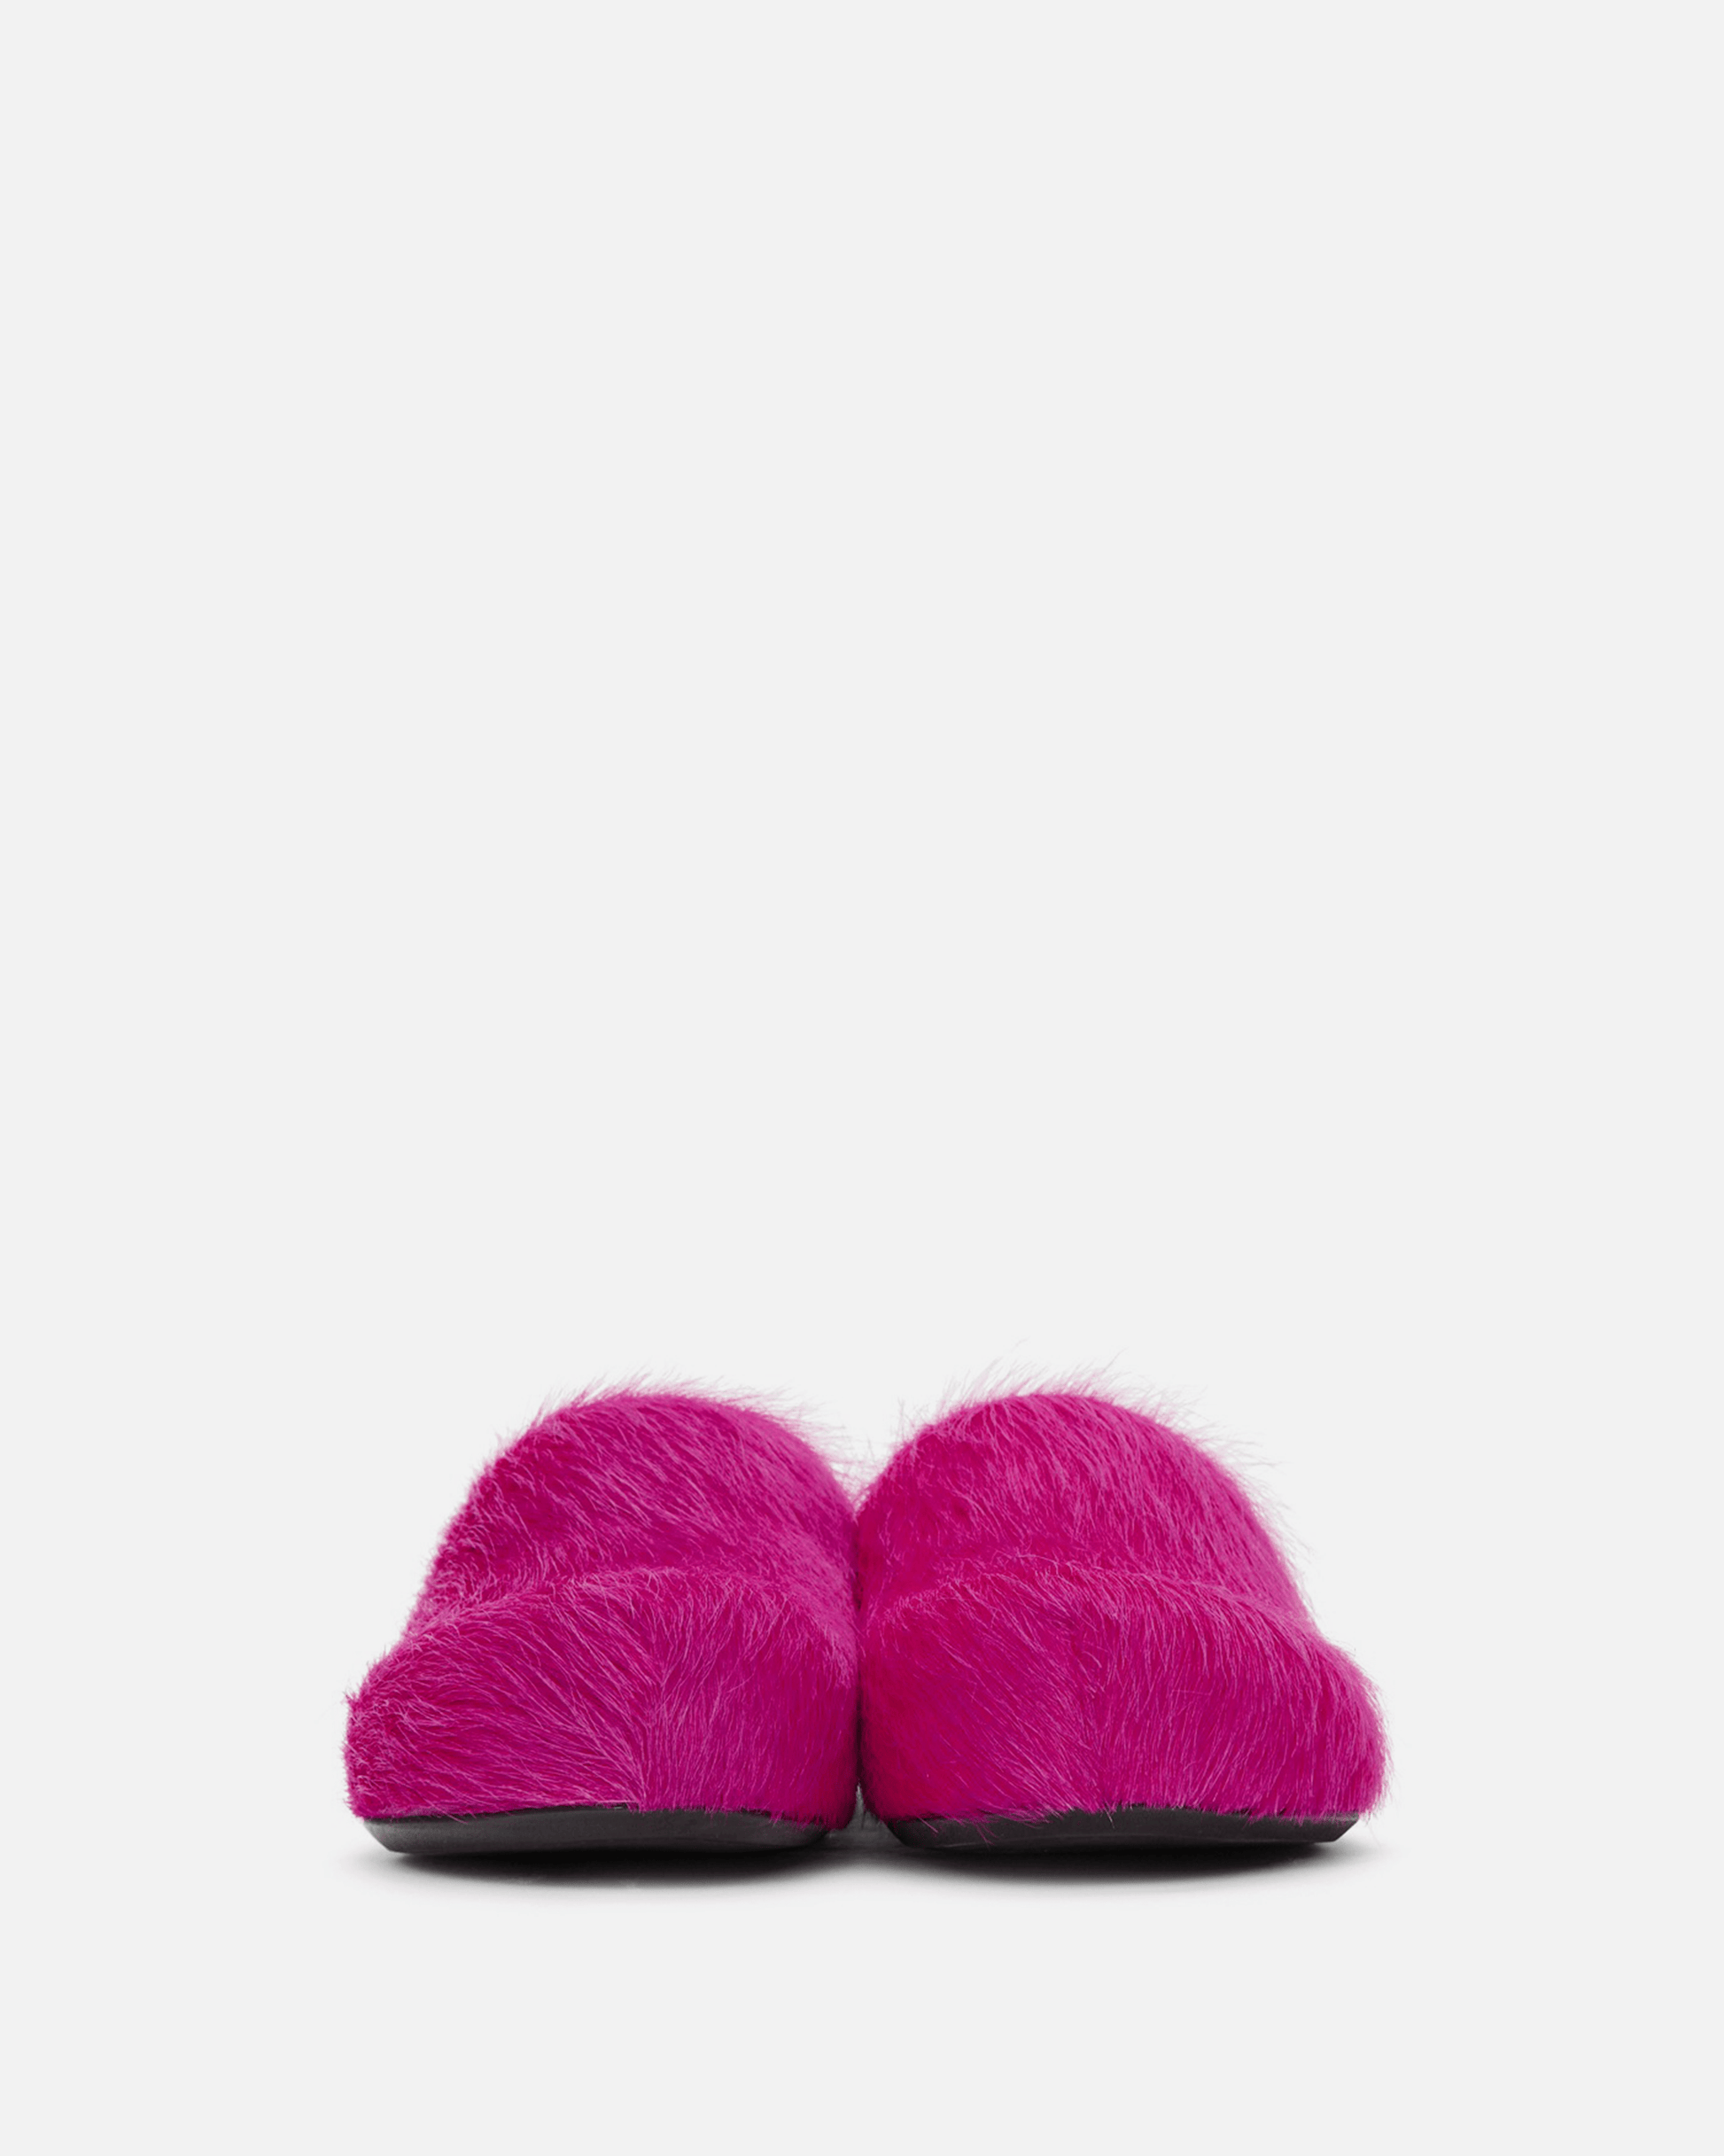 Marni Women's Shoes Calf-Hair Sabot in Fuchsia